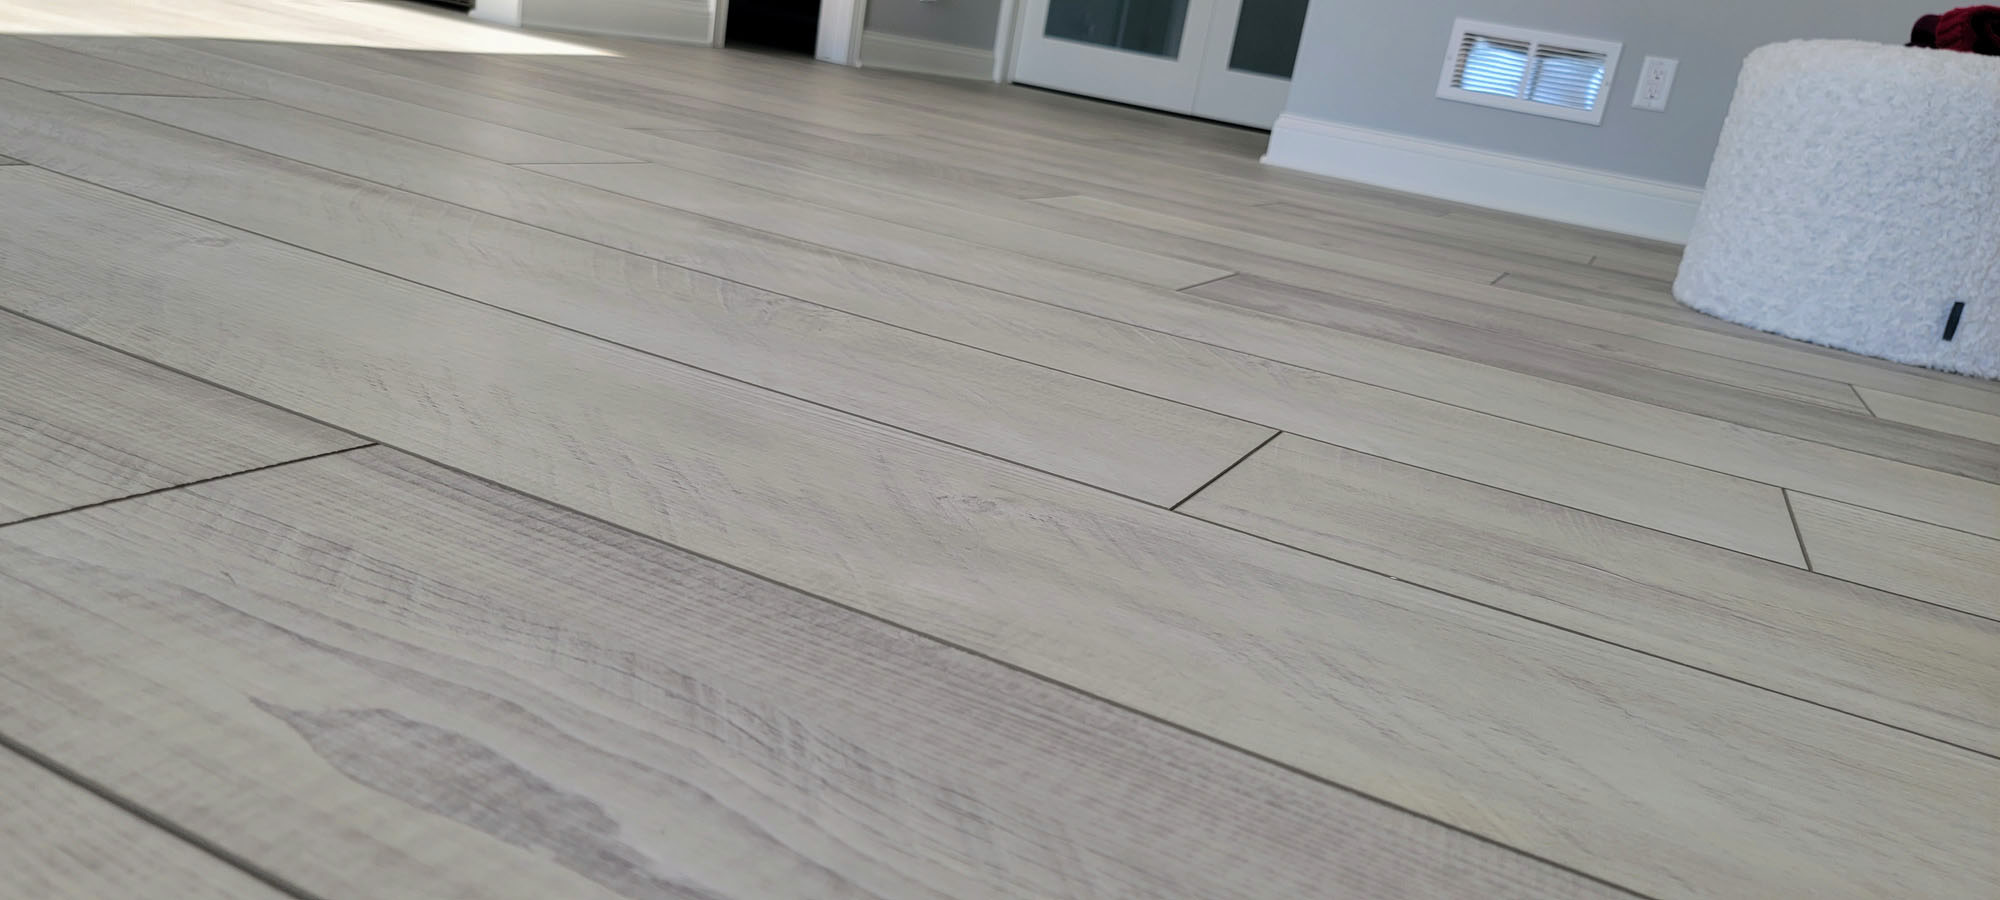 Luxury Vinyl Plank floors, LVP